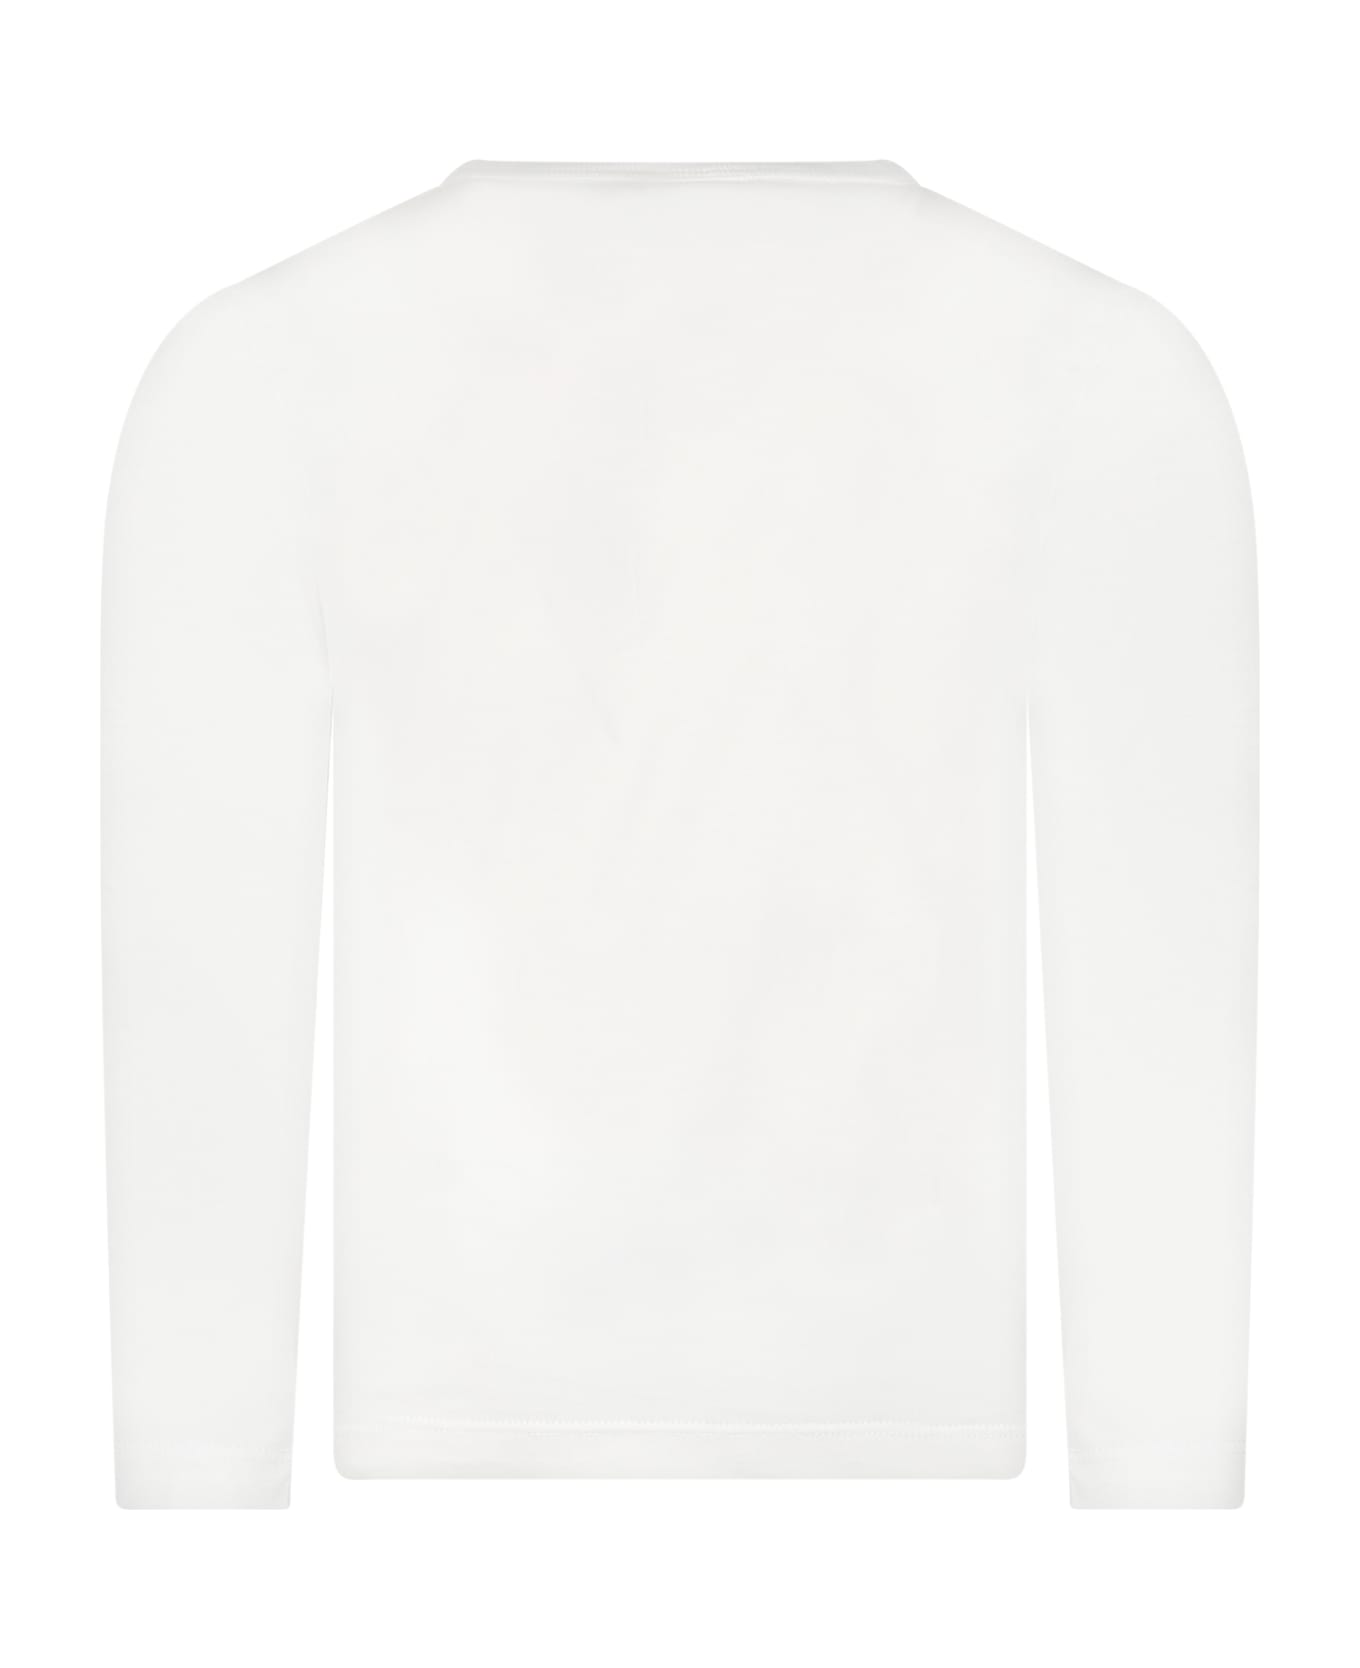 Stella McCartney Kids White T-shirt For Girl With Unicorn - White